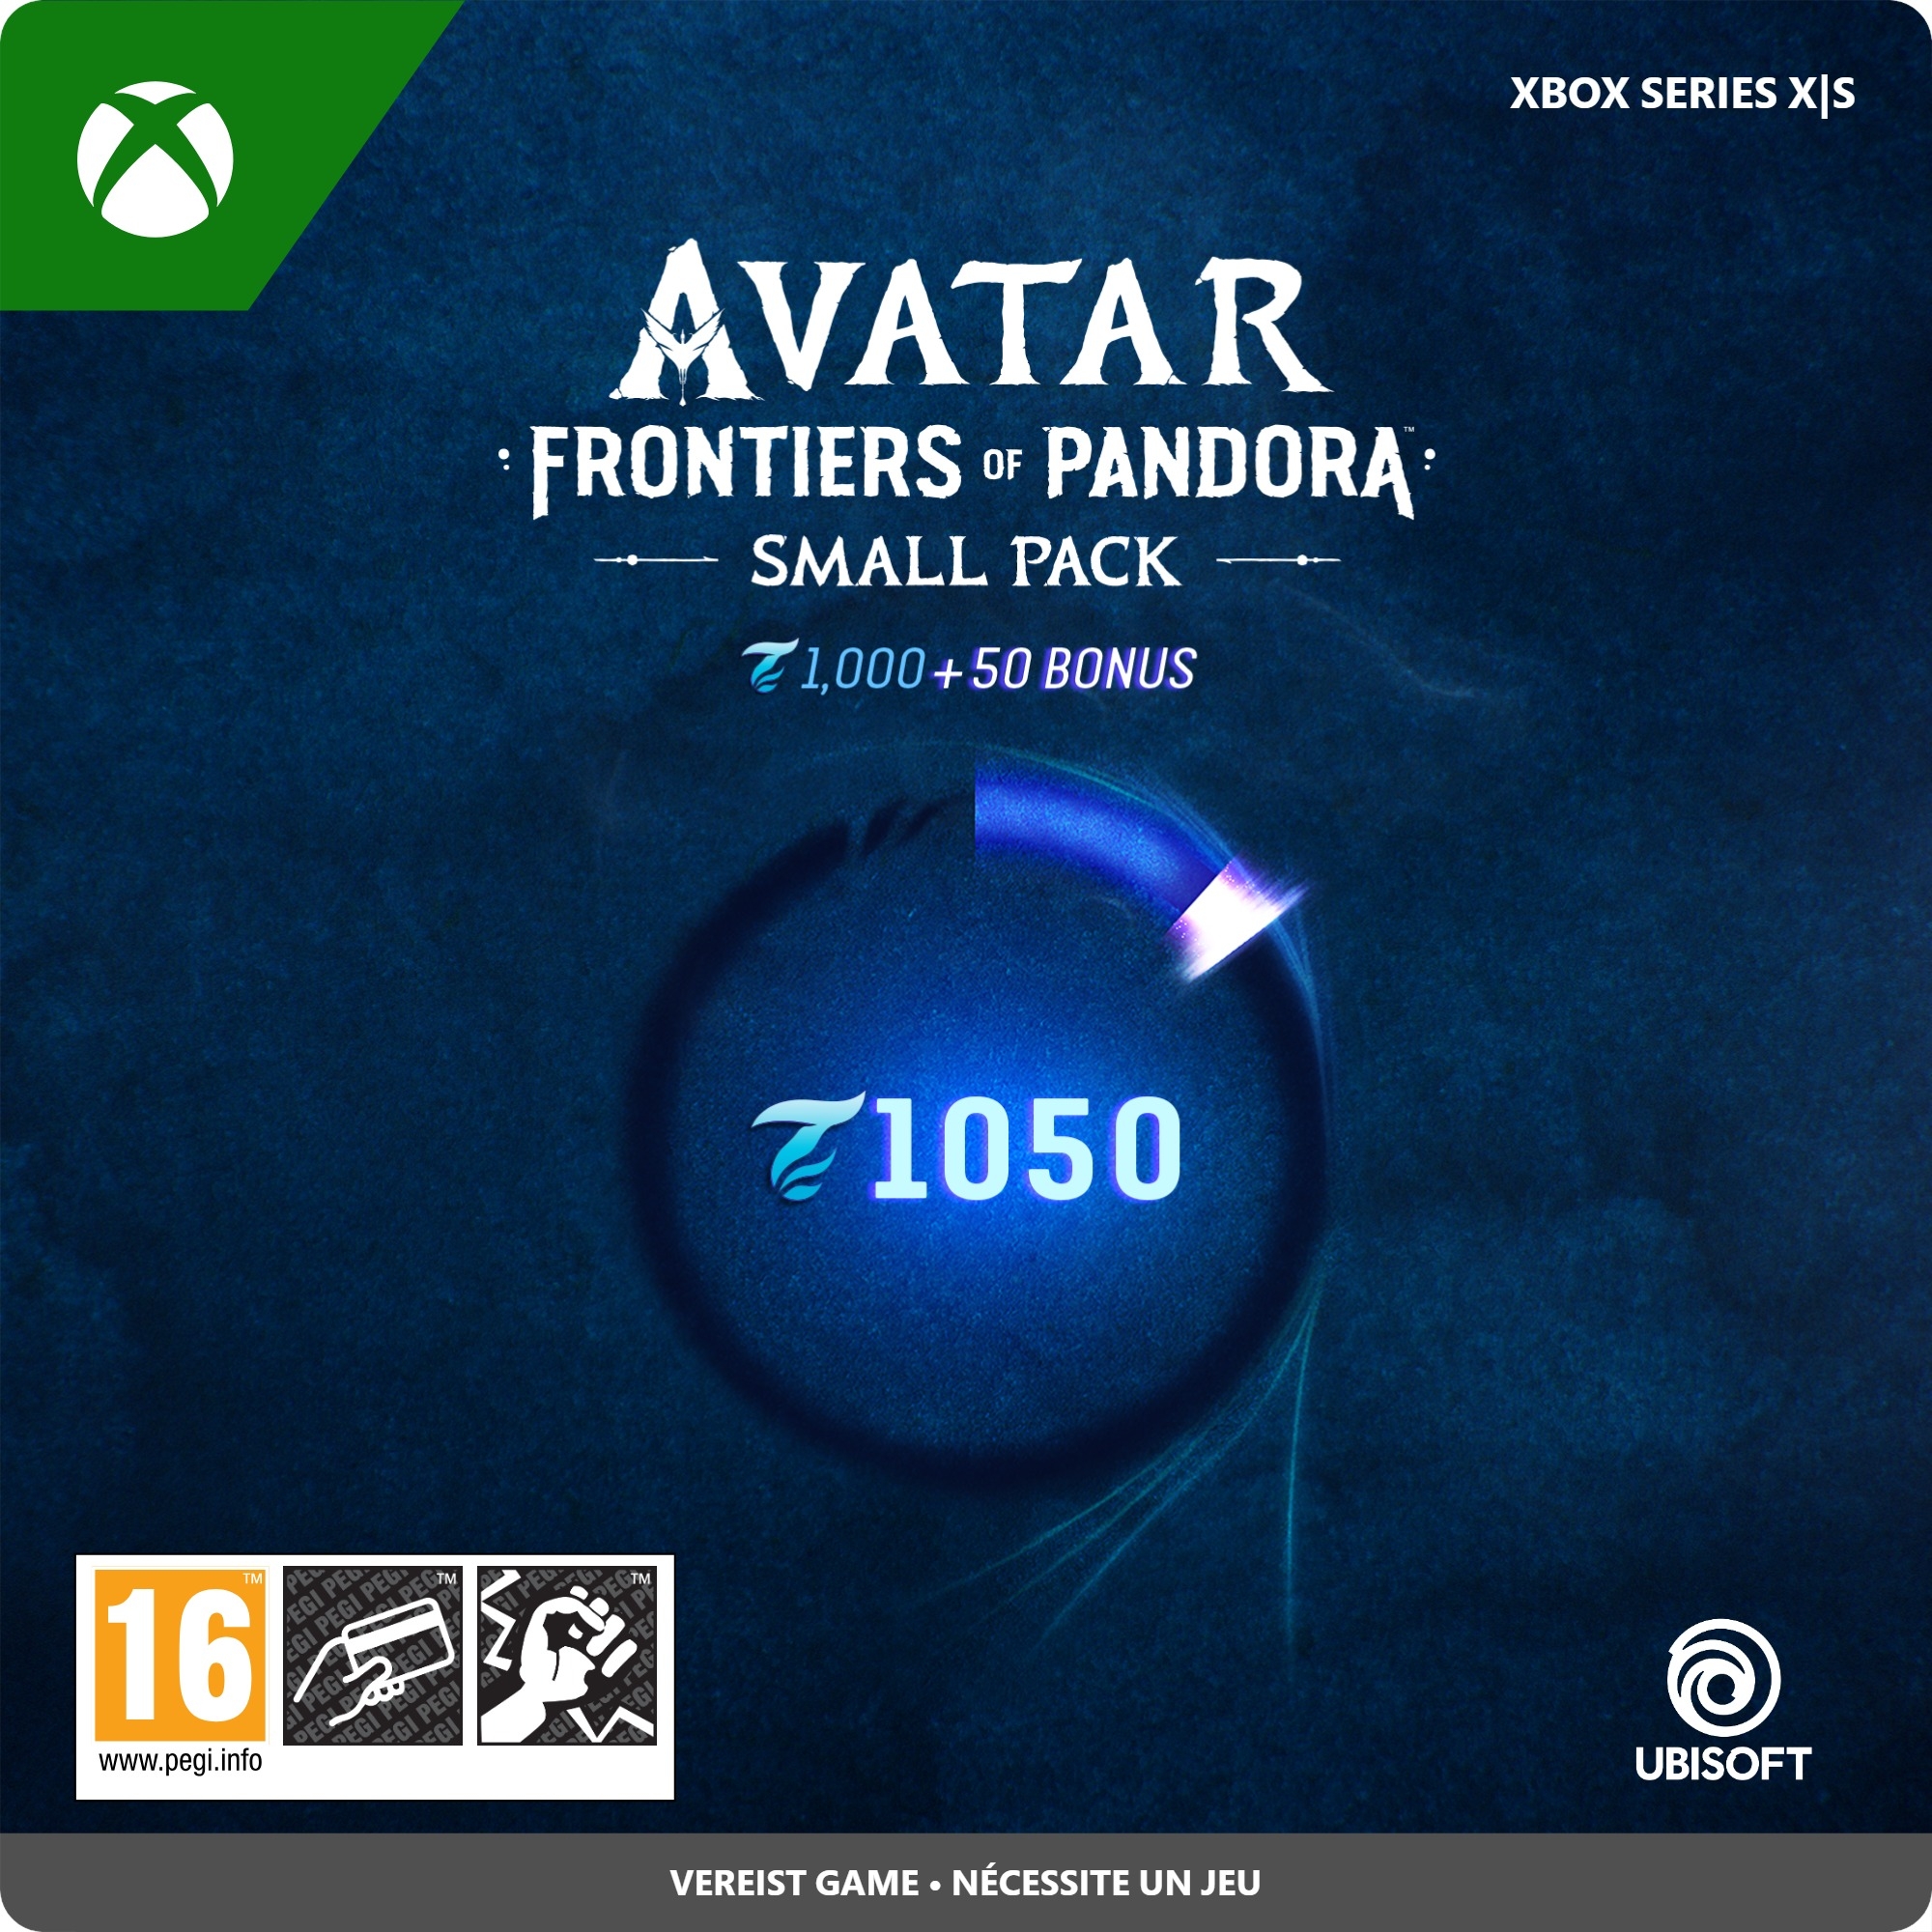 1.050 Xbox Avatar: Frontiers of Pandora Small Pack Tokens (direct digitaal geleverd)